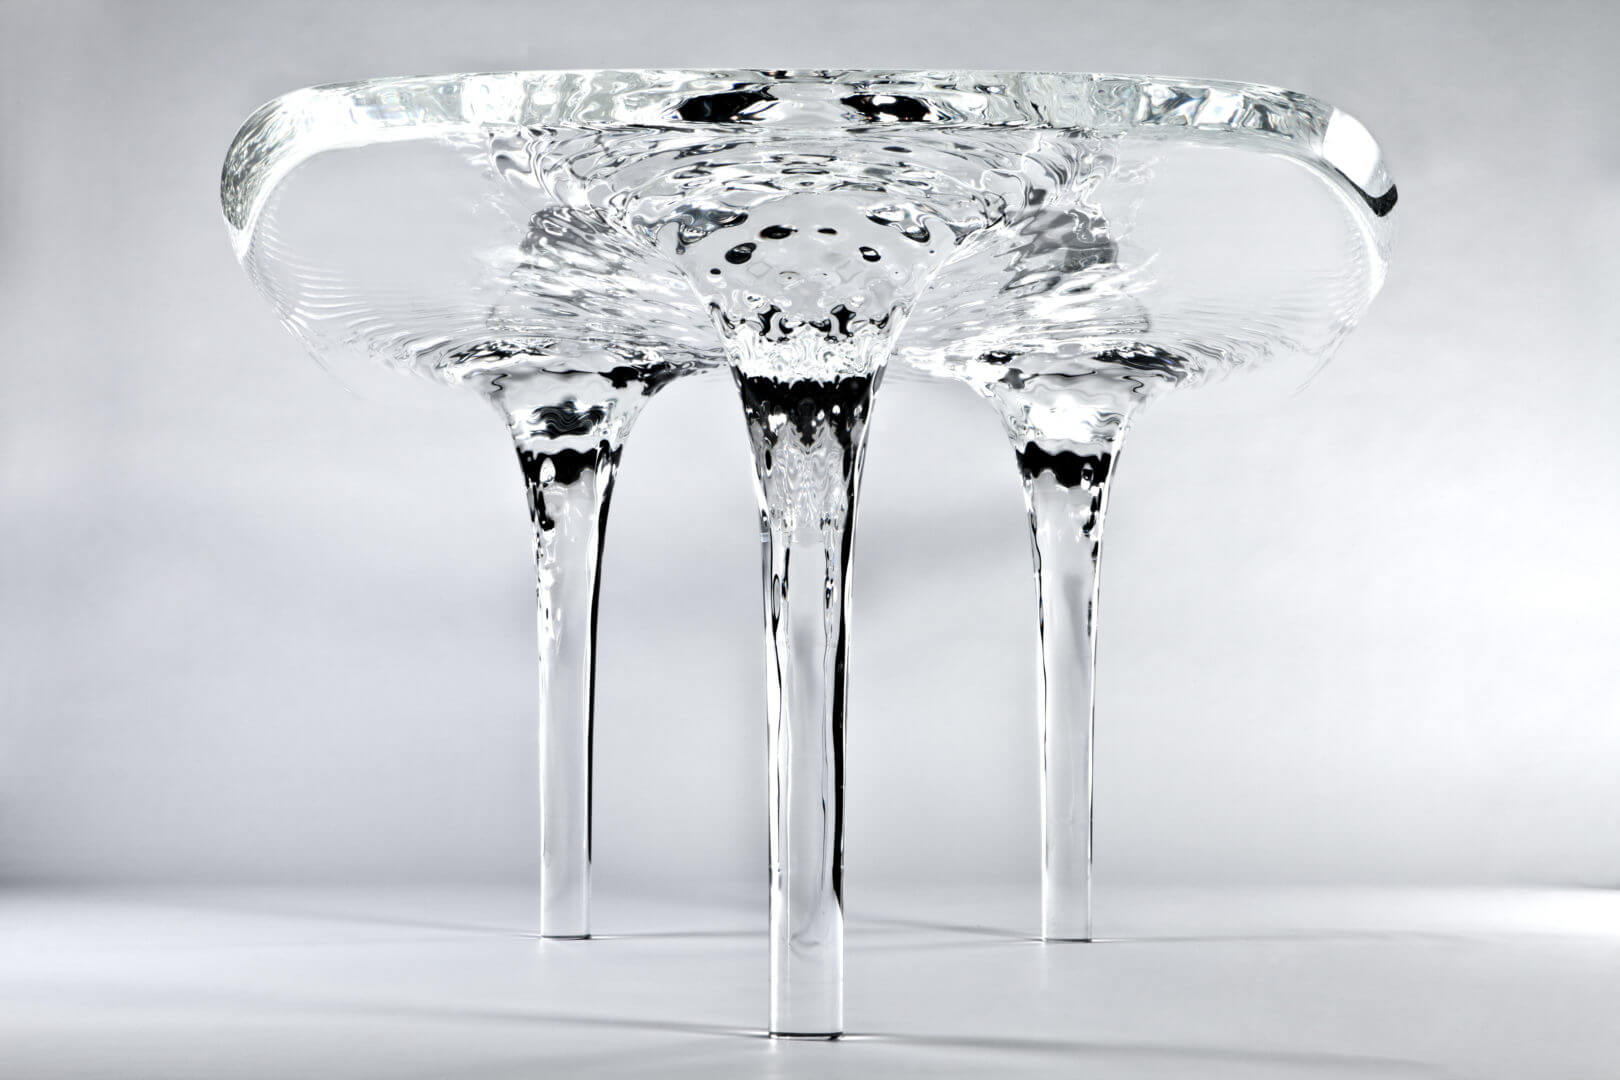 Biophilic design displaying ripples of water